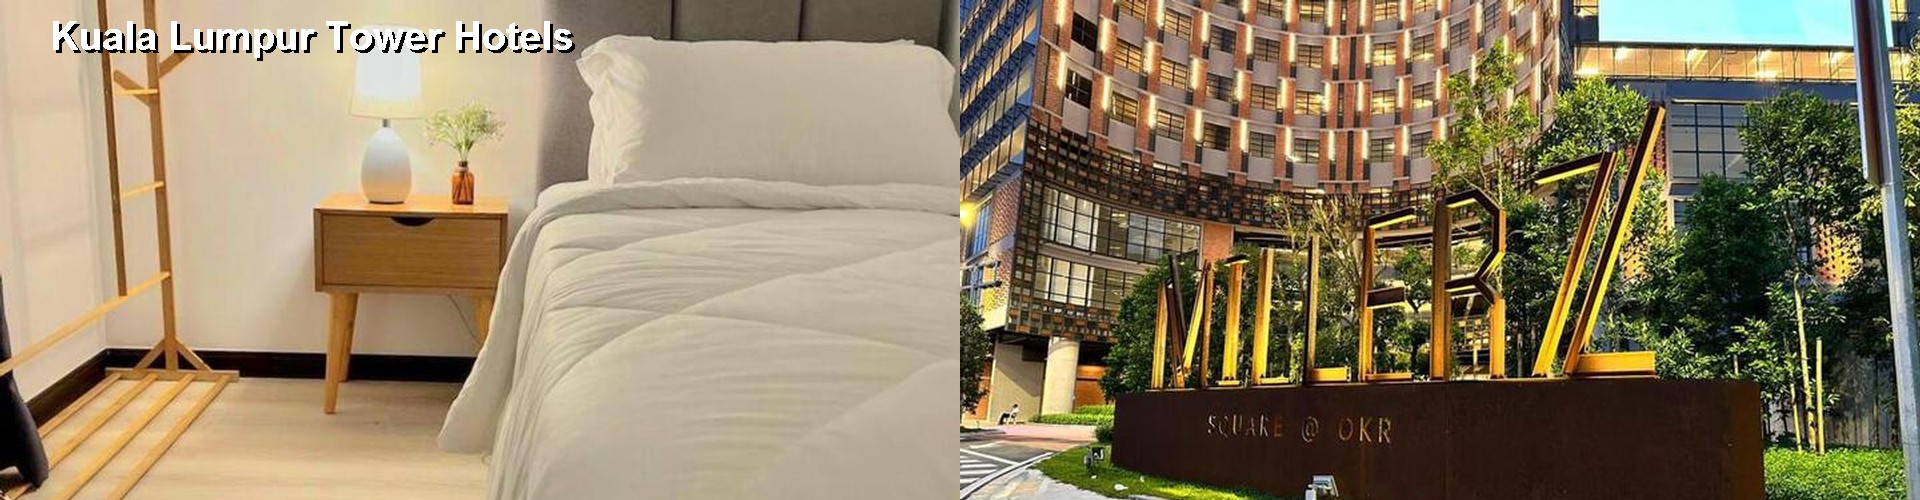 5 Best Hotels near Kuala Lumpur Tower